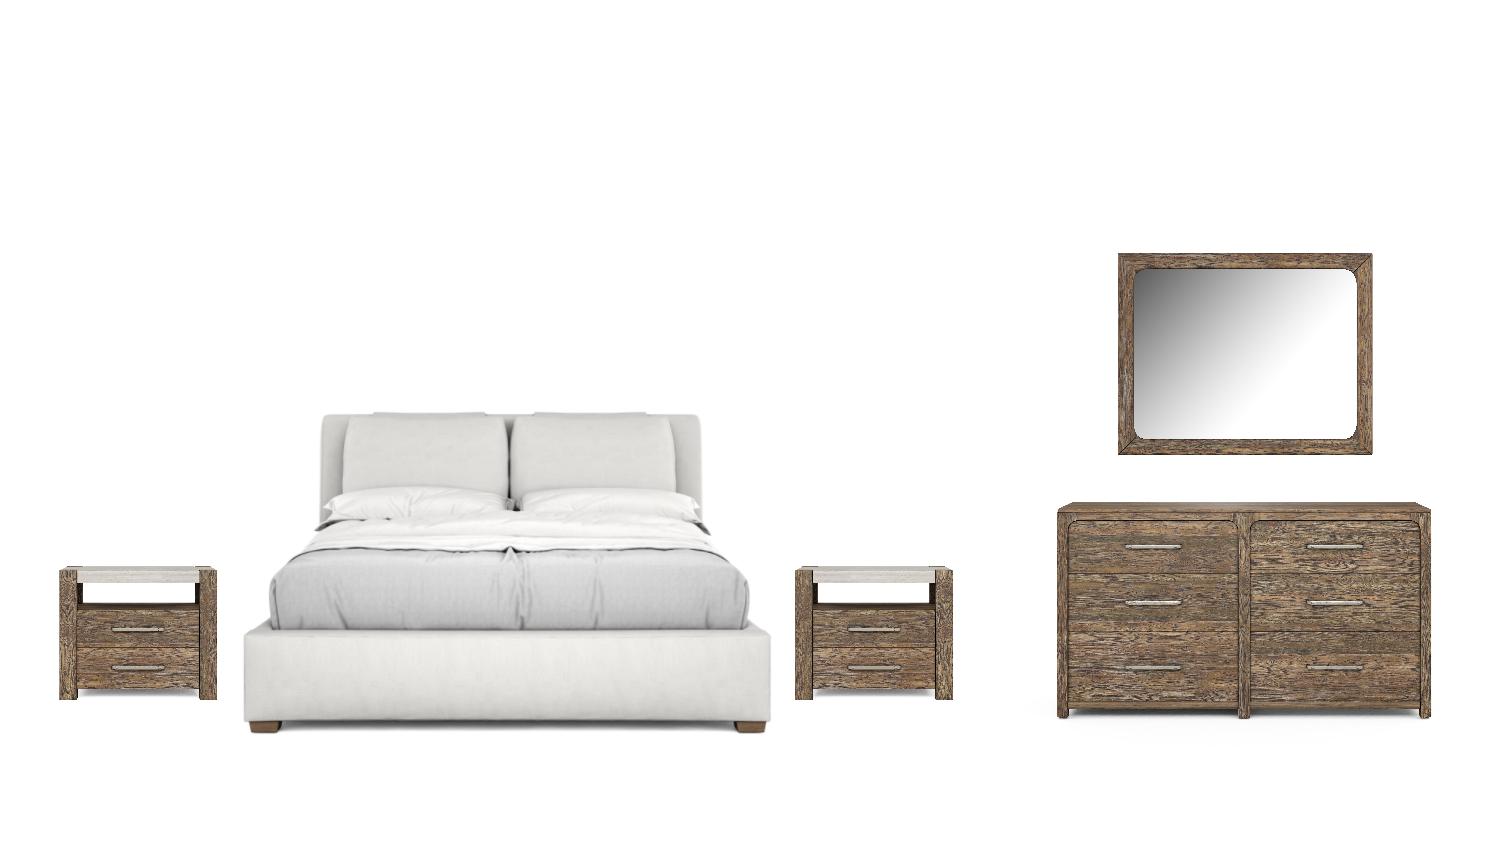 Modern, Transitional Platform Bedroom Set Stockyard 284126-2303-WH-2NDM-5PCS in Light Gray, White Fabric